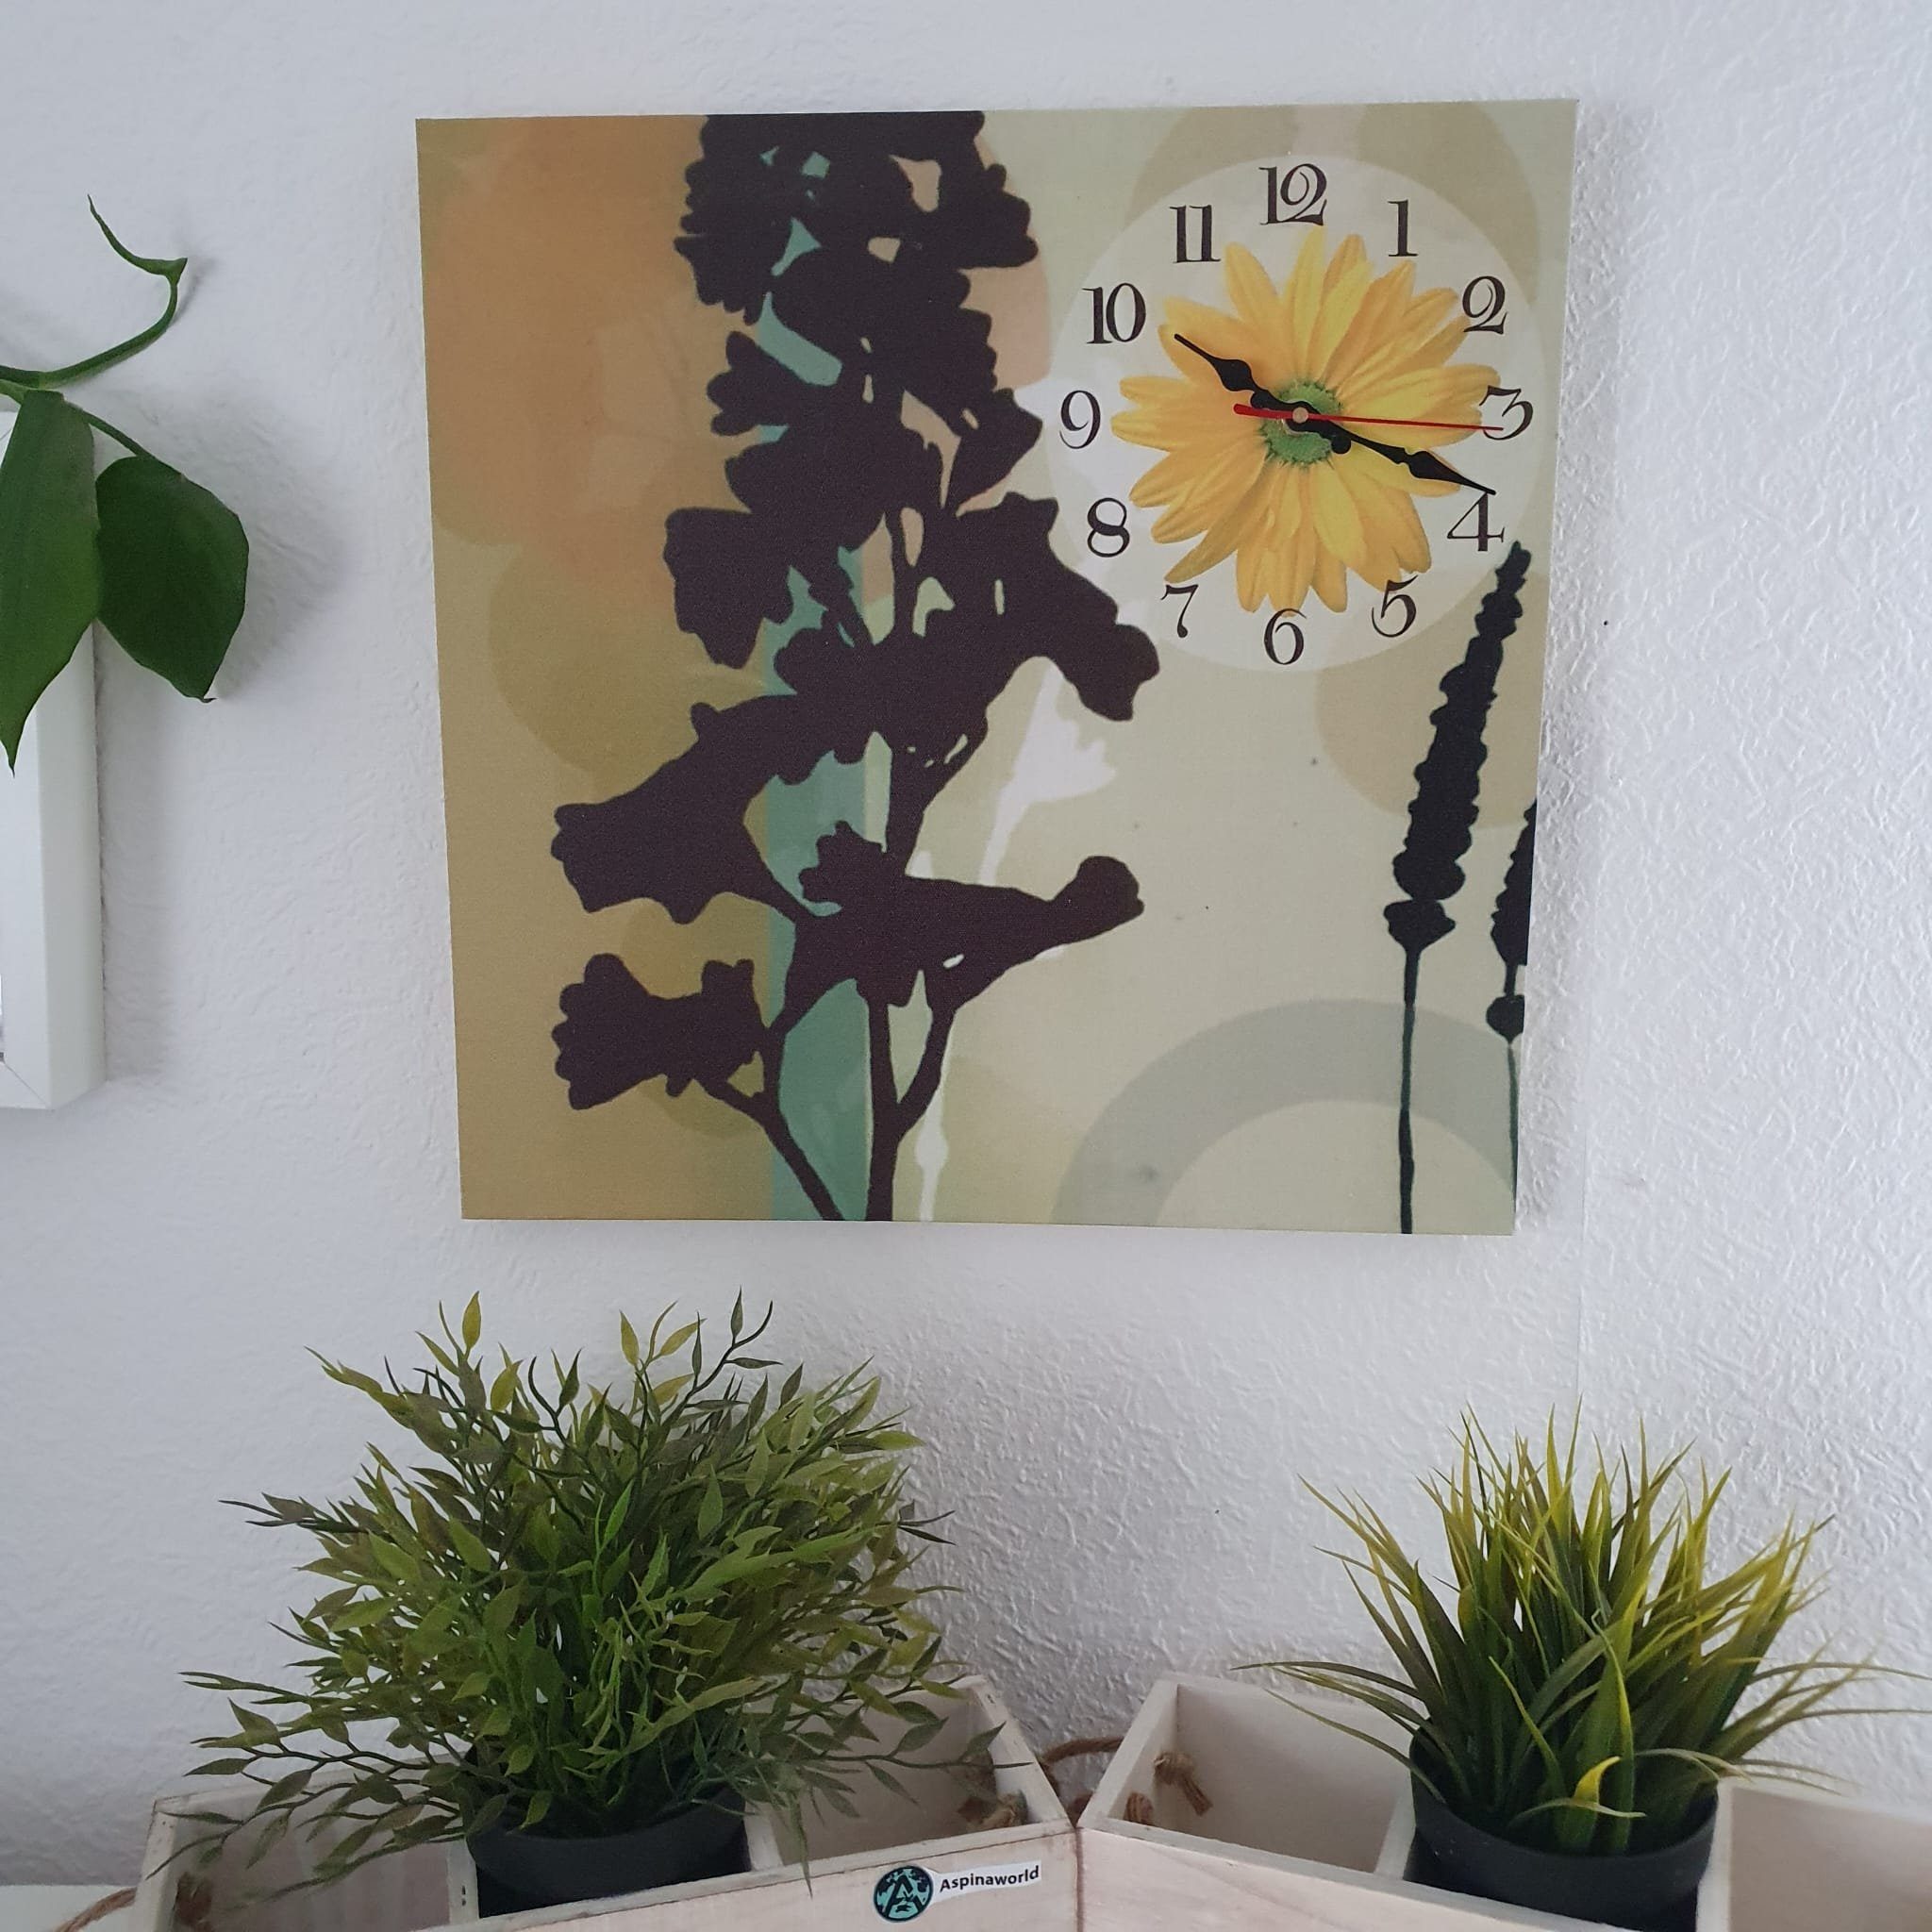 Aspinaworld Wanduhr Aus Holz mit Sonnenblume 40 x 45 cm